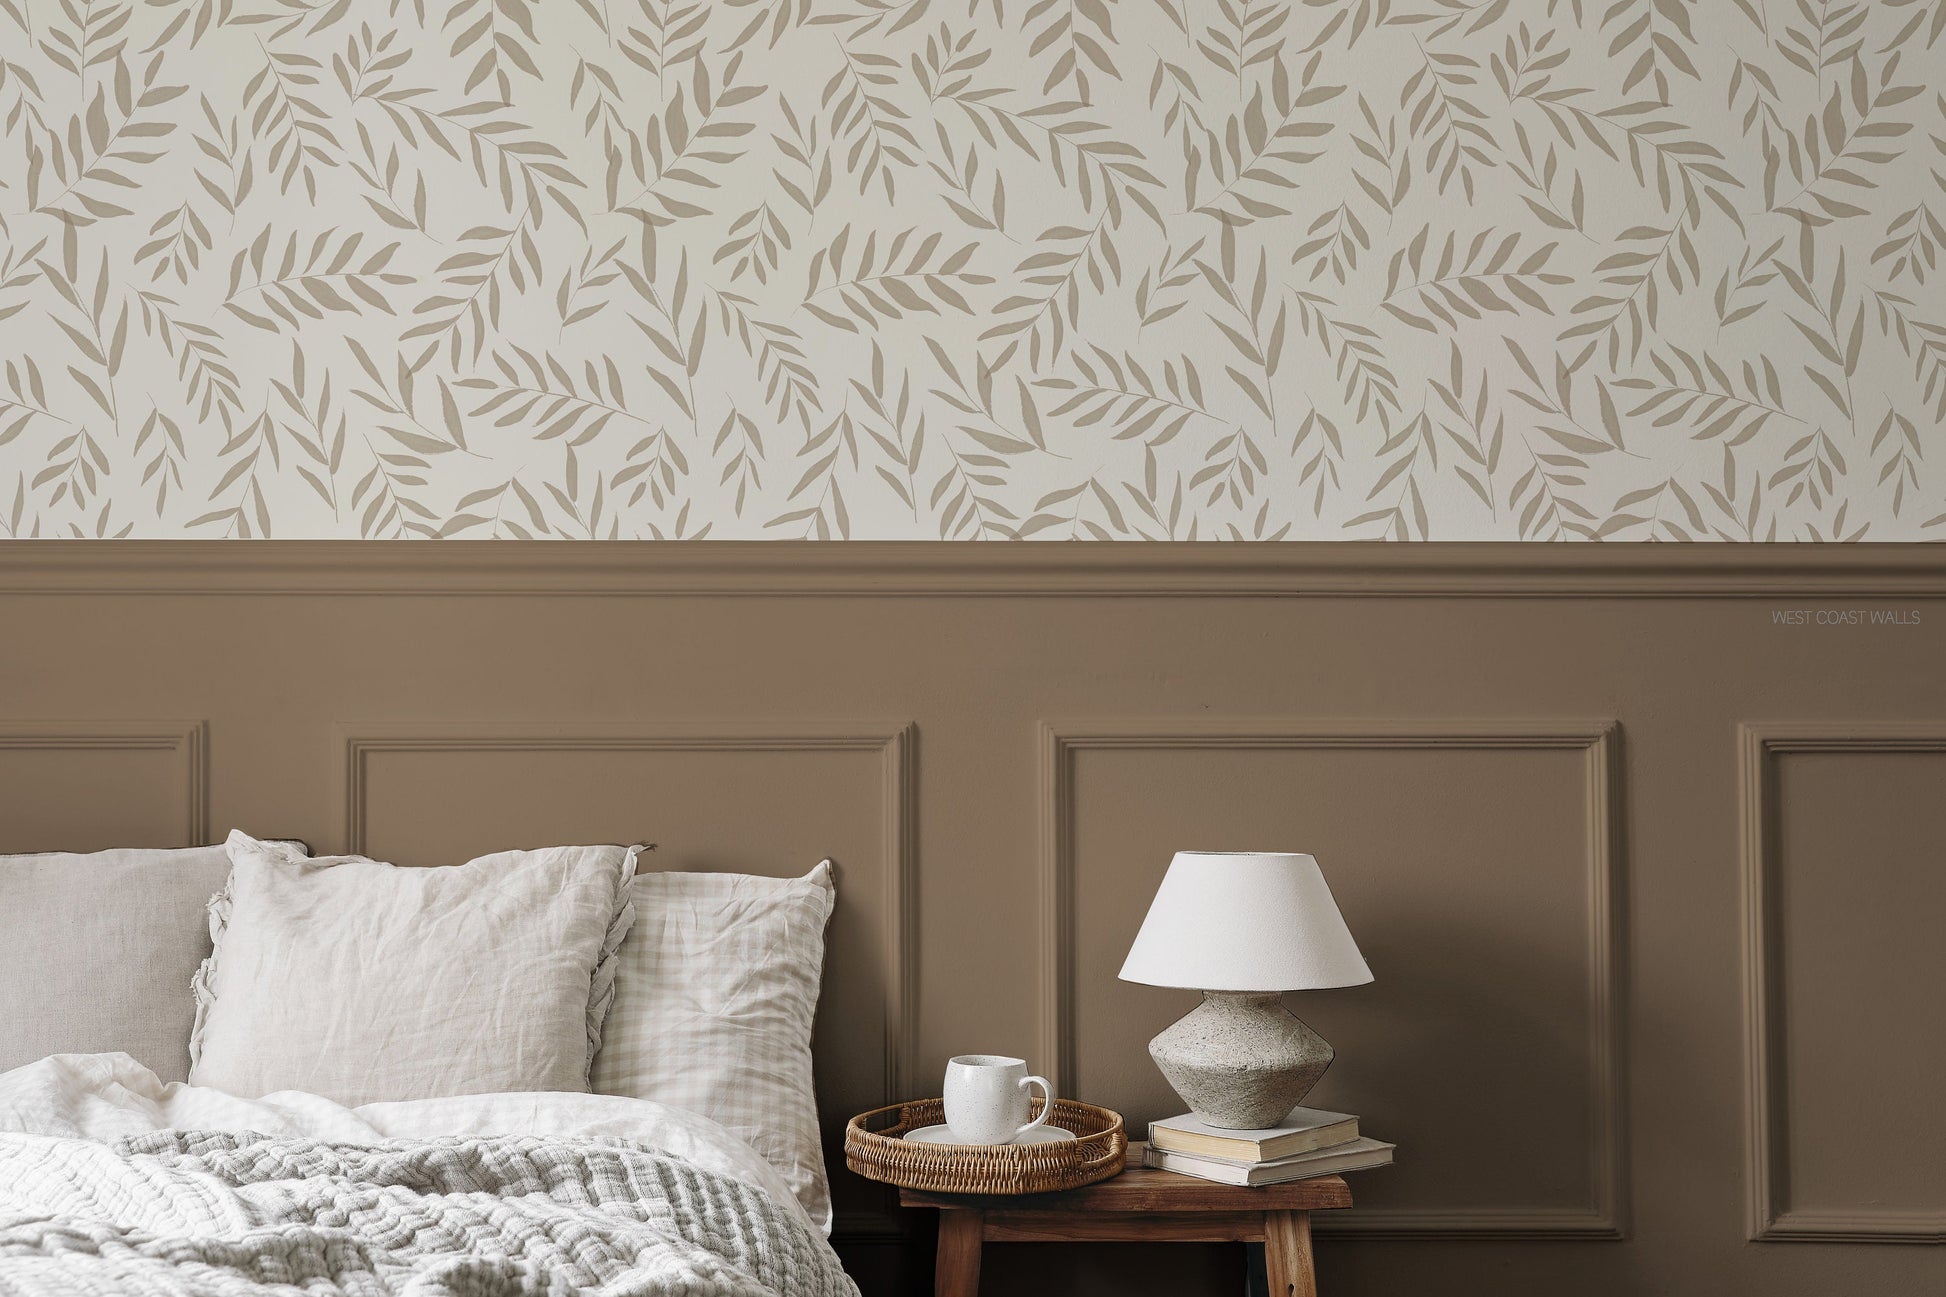 Creamy Brown Fern Leaves Wallpaper / Palm Wallpaper / Peel and Stick Wallpaper / Neutral Nursery / Neutral Walls / Leaf Wallpaper